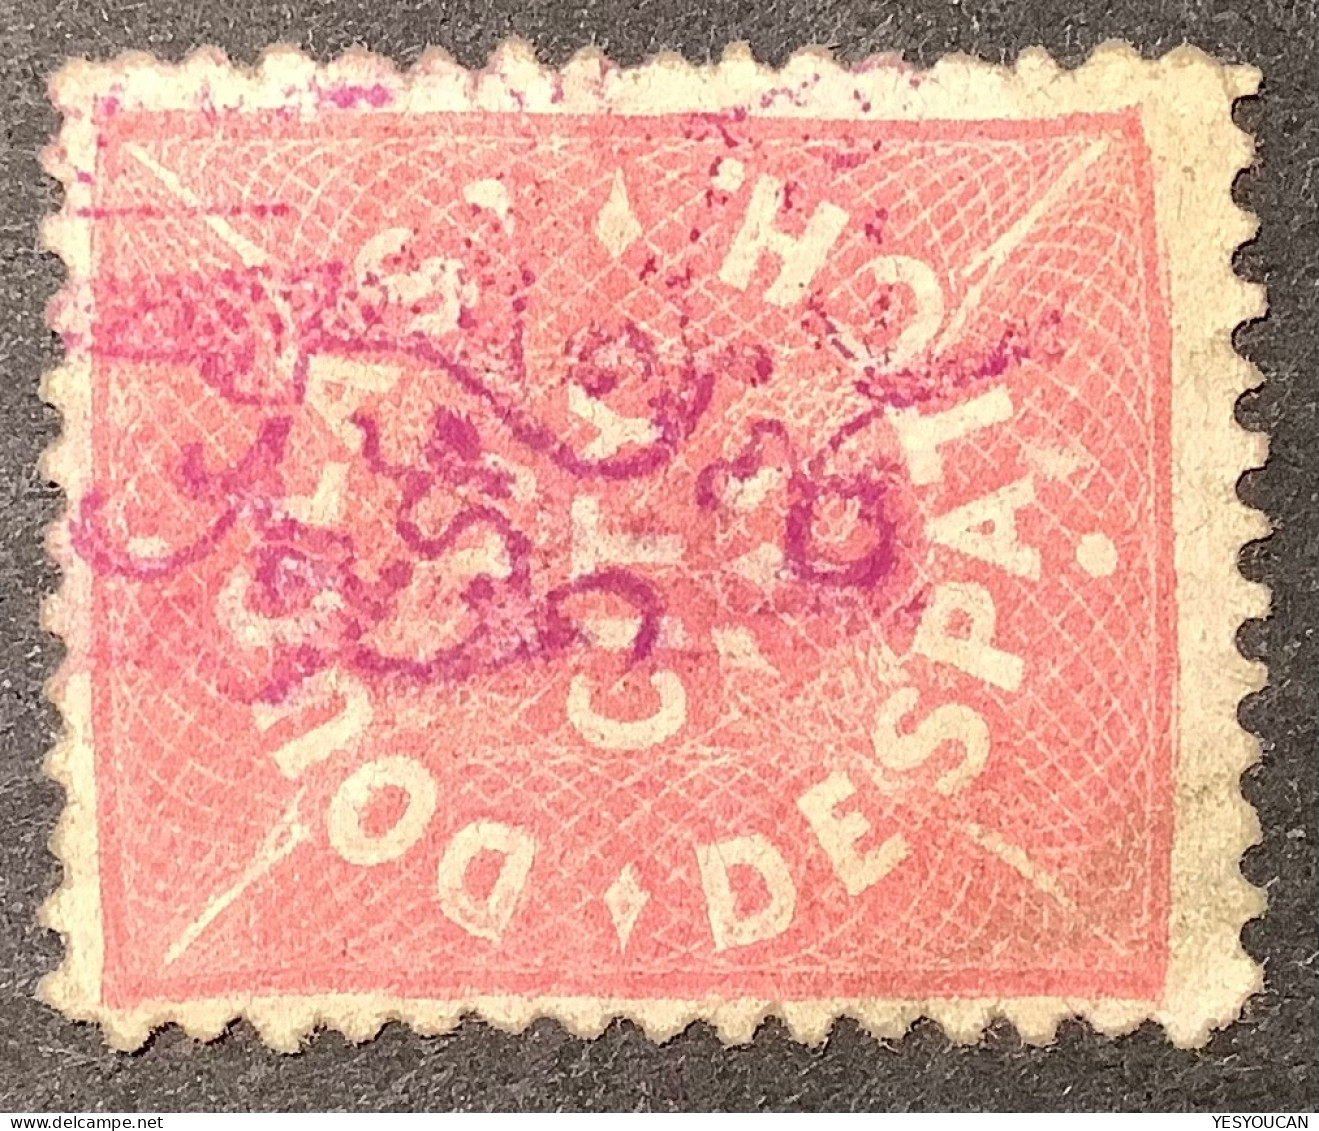 Douglas City Despatch, New York 1879 (1c) Pink, Sc.59L1 Used US Local Post (USA U.S Poste Locale - Lokale Post